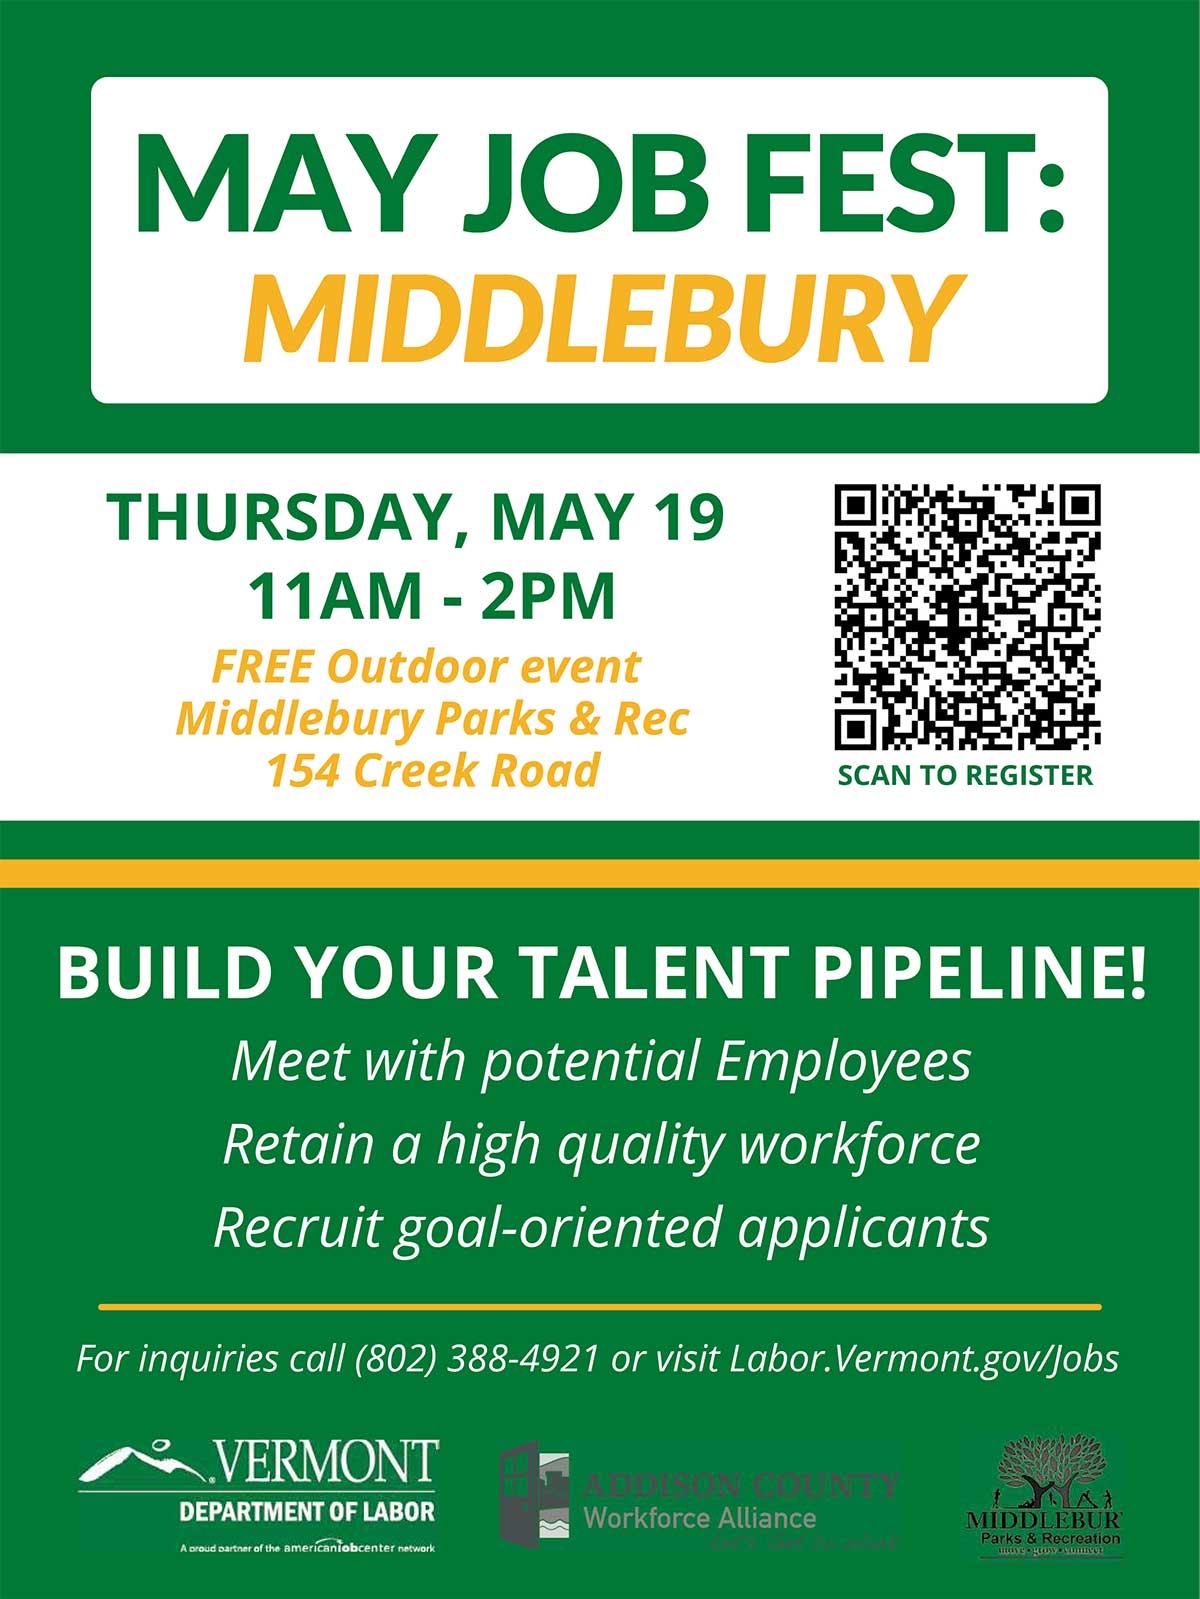 Middlebury Job Fest Employer Flyer